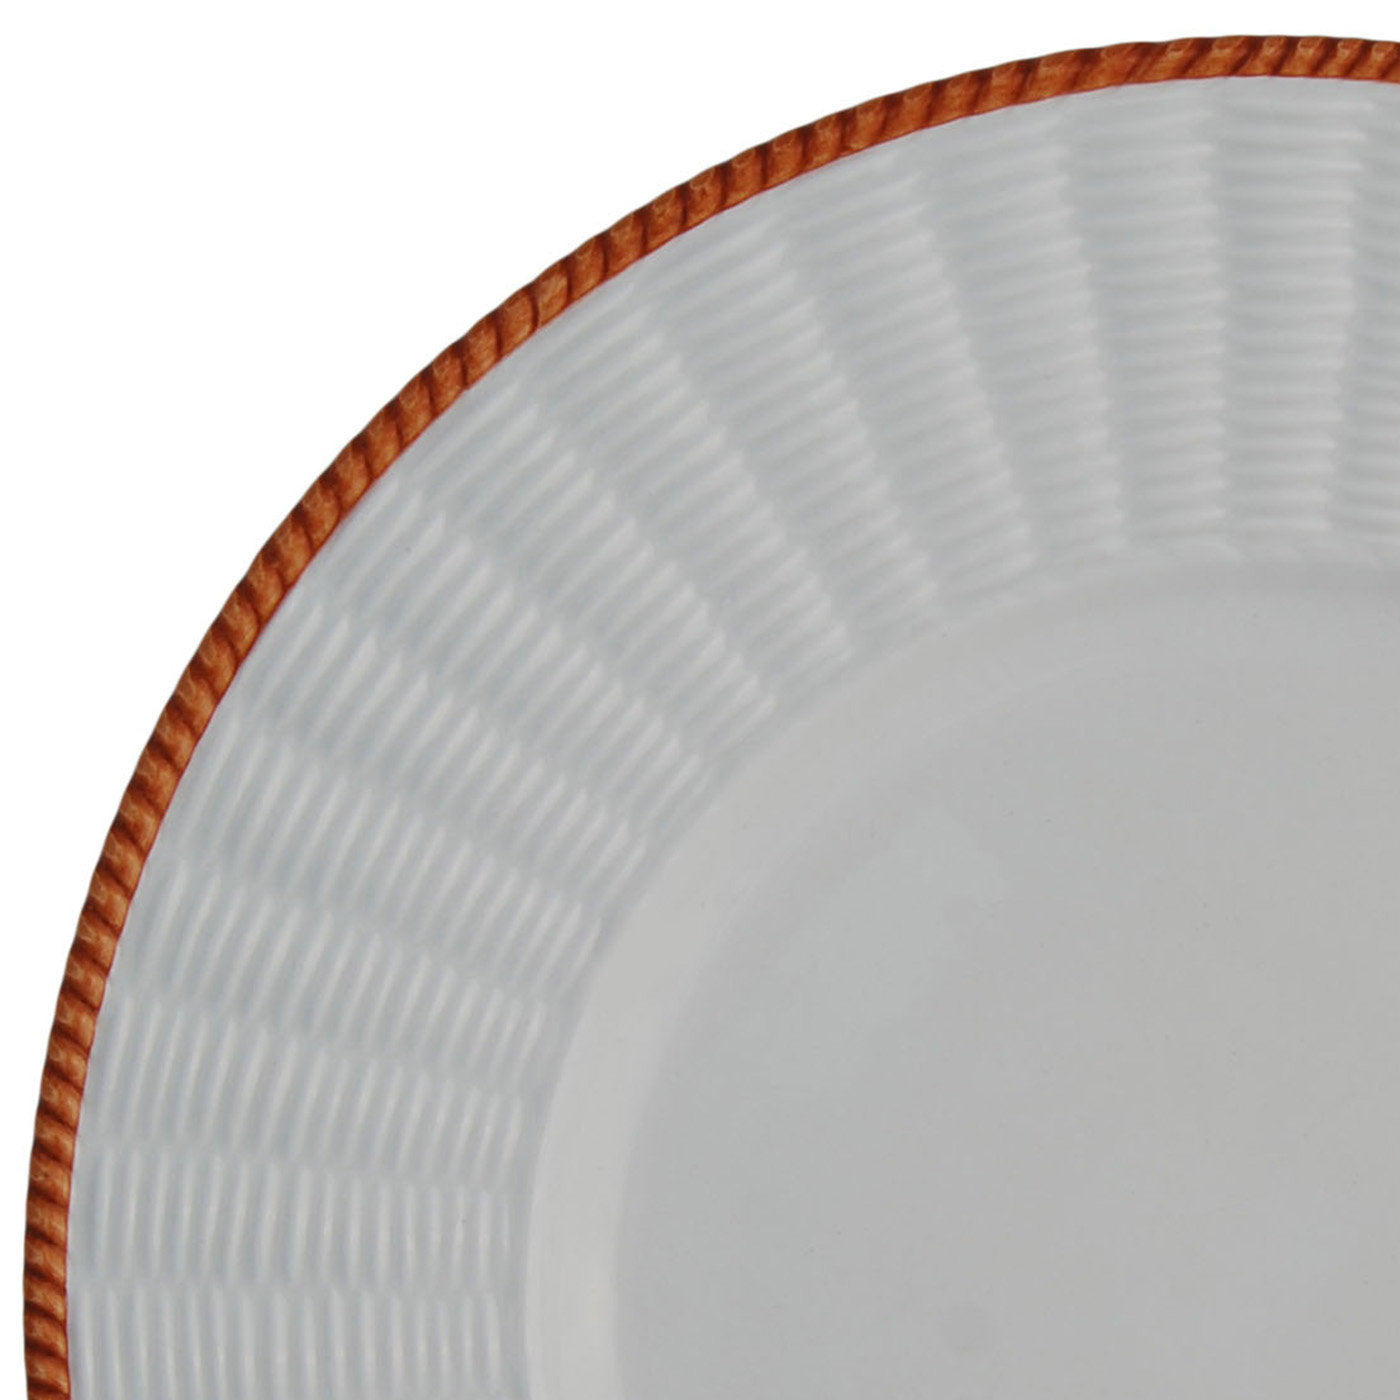 Set of 4 Orange Wicker Plates - Alternative view 1